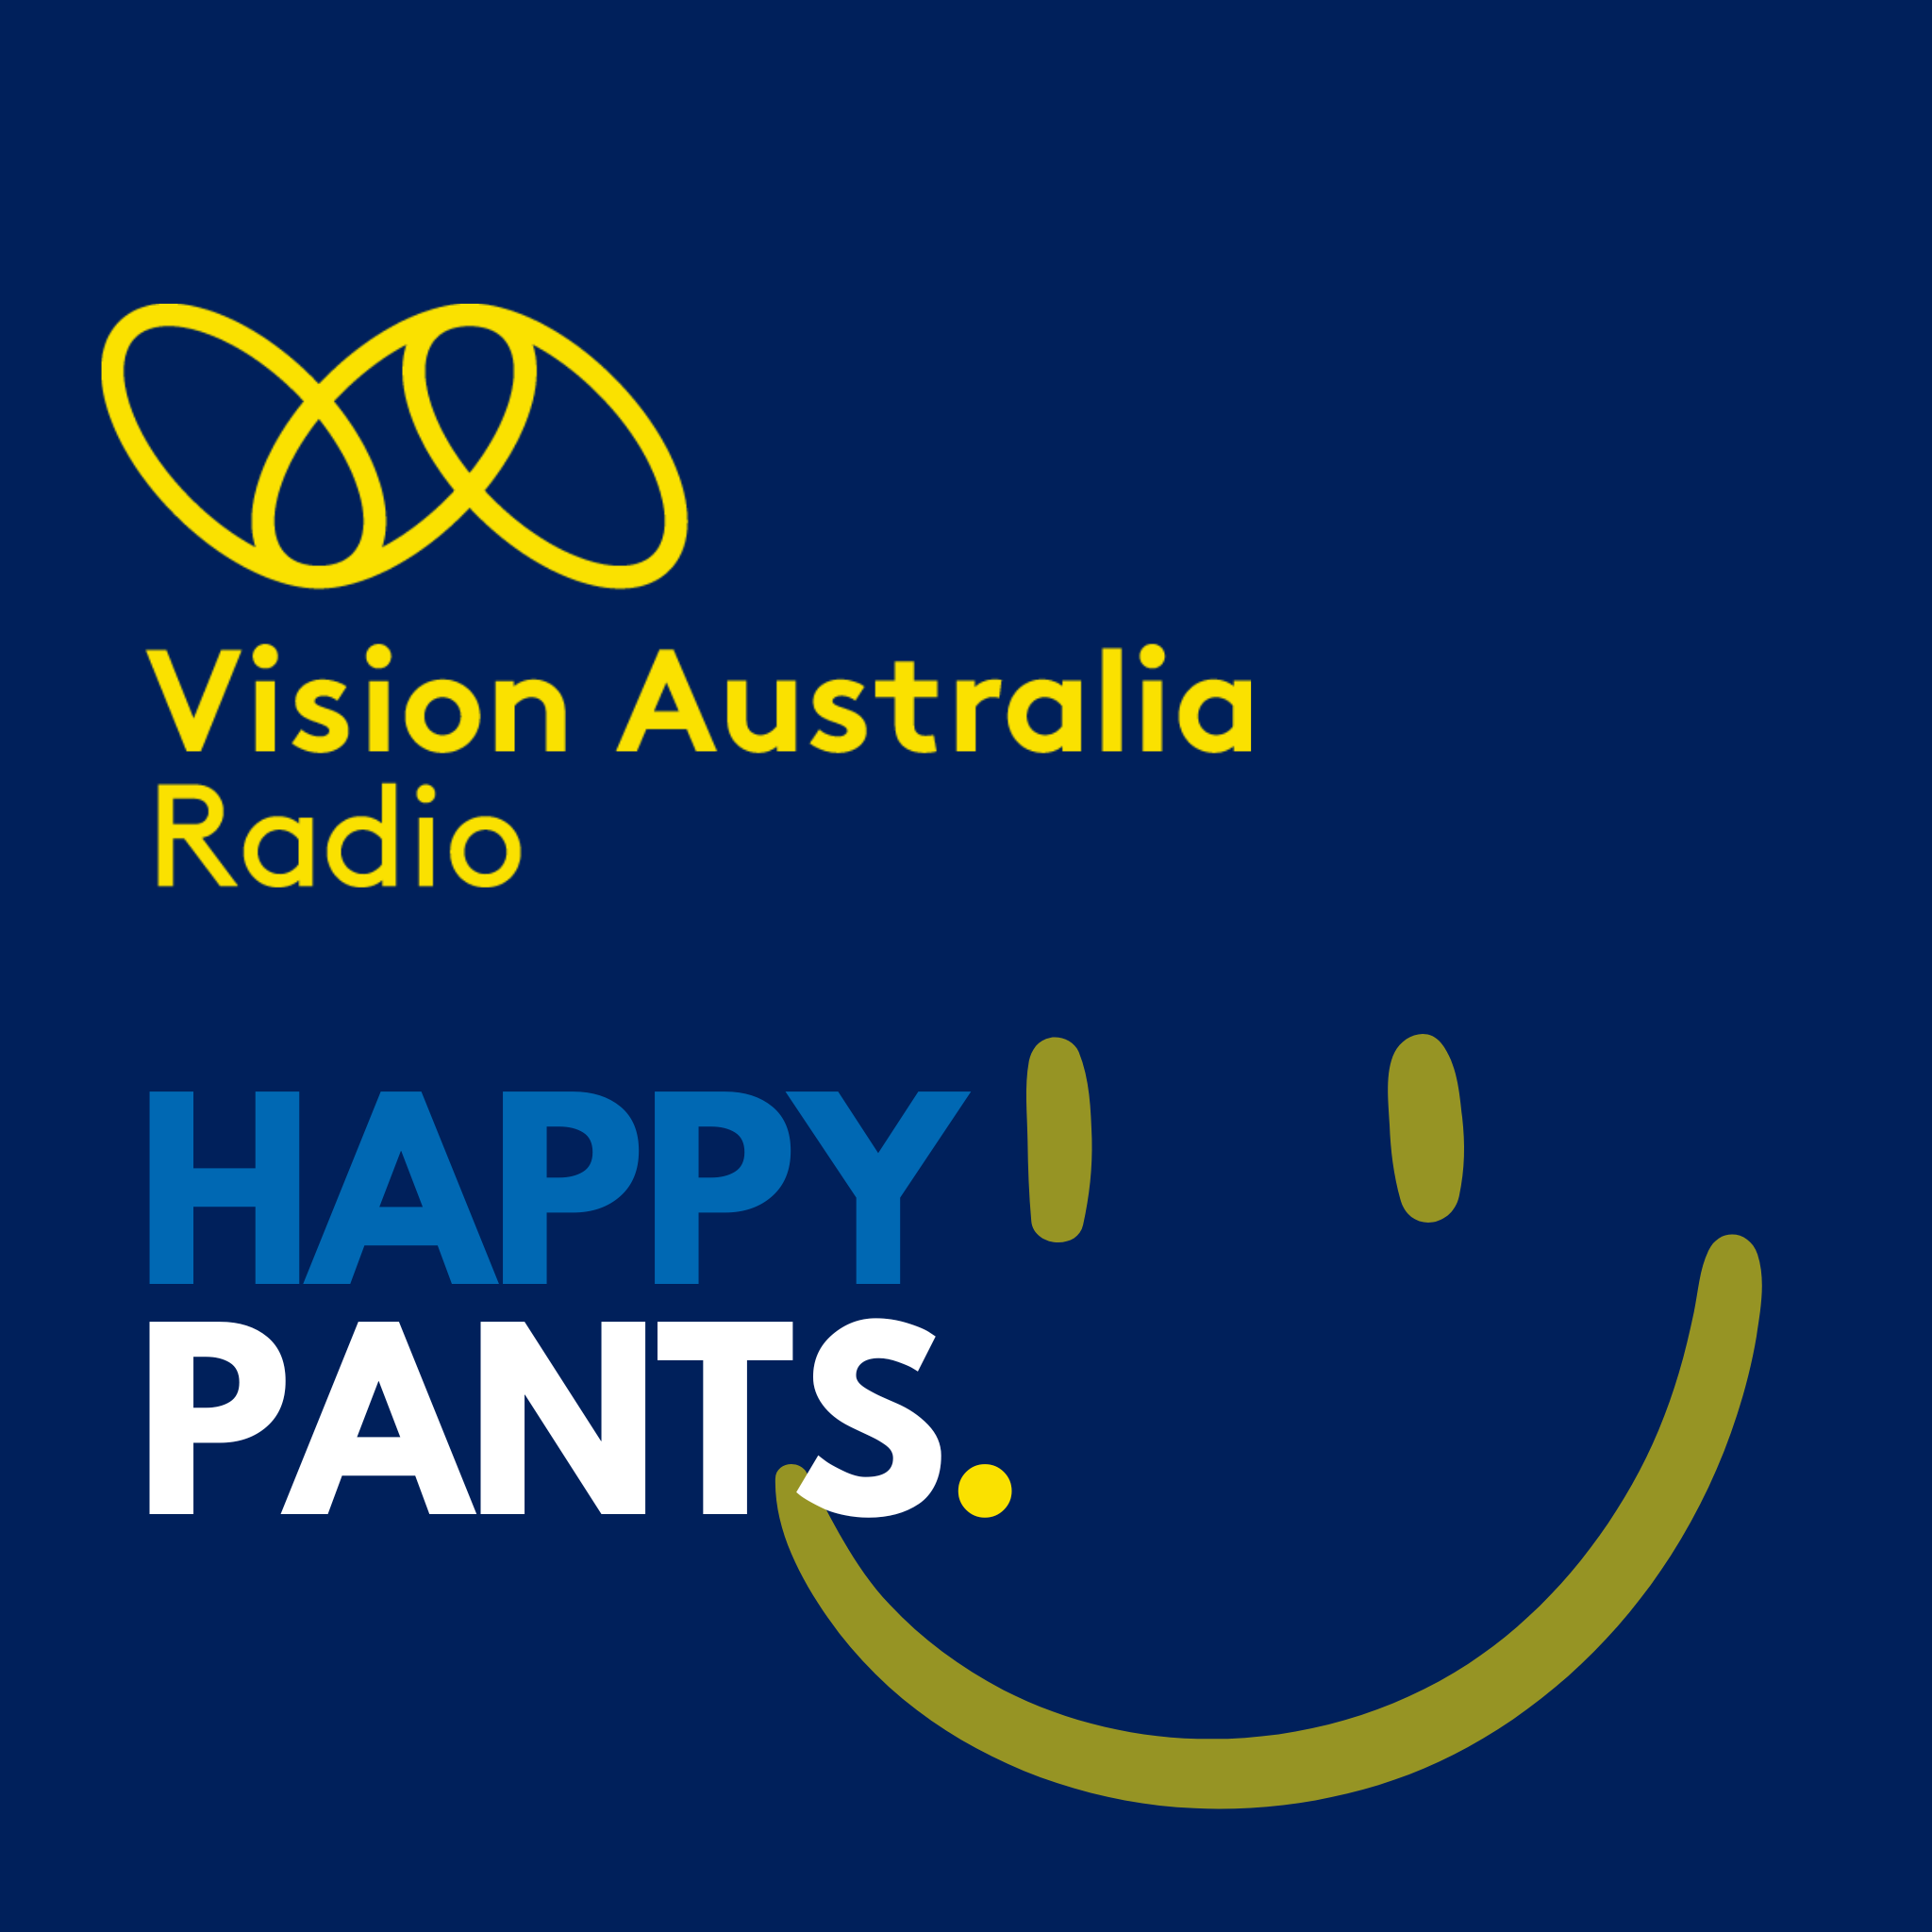 Happy Pants - February 10